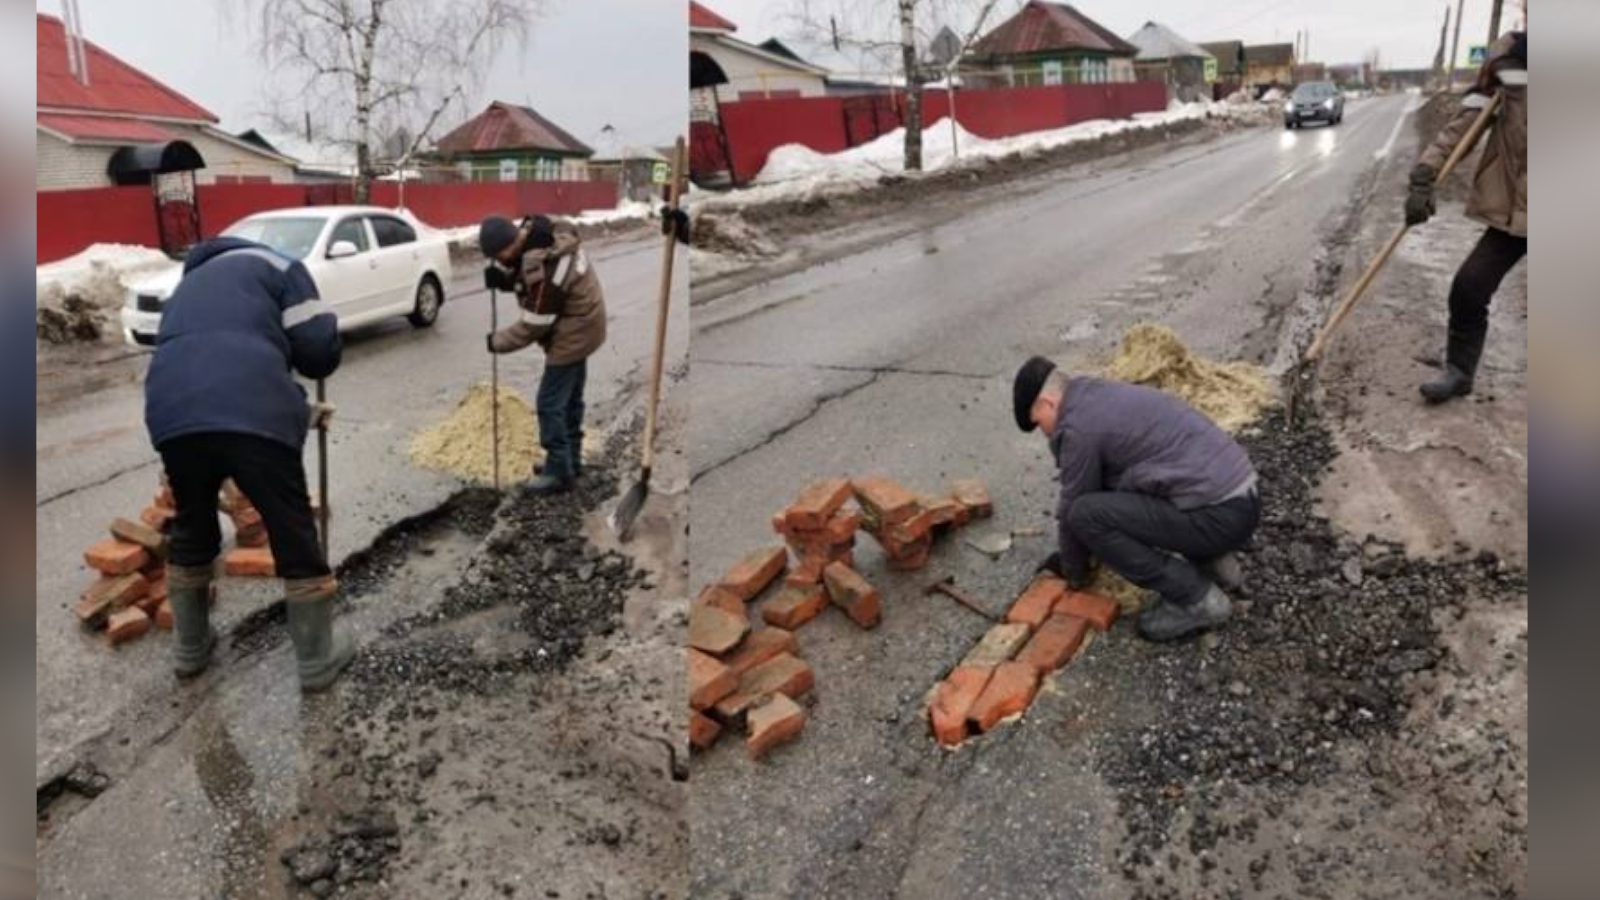 In Shumerla they began to repair roads with bricks